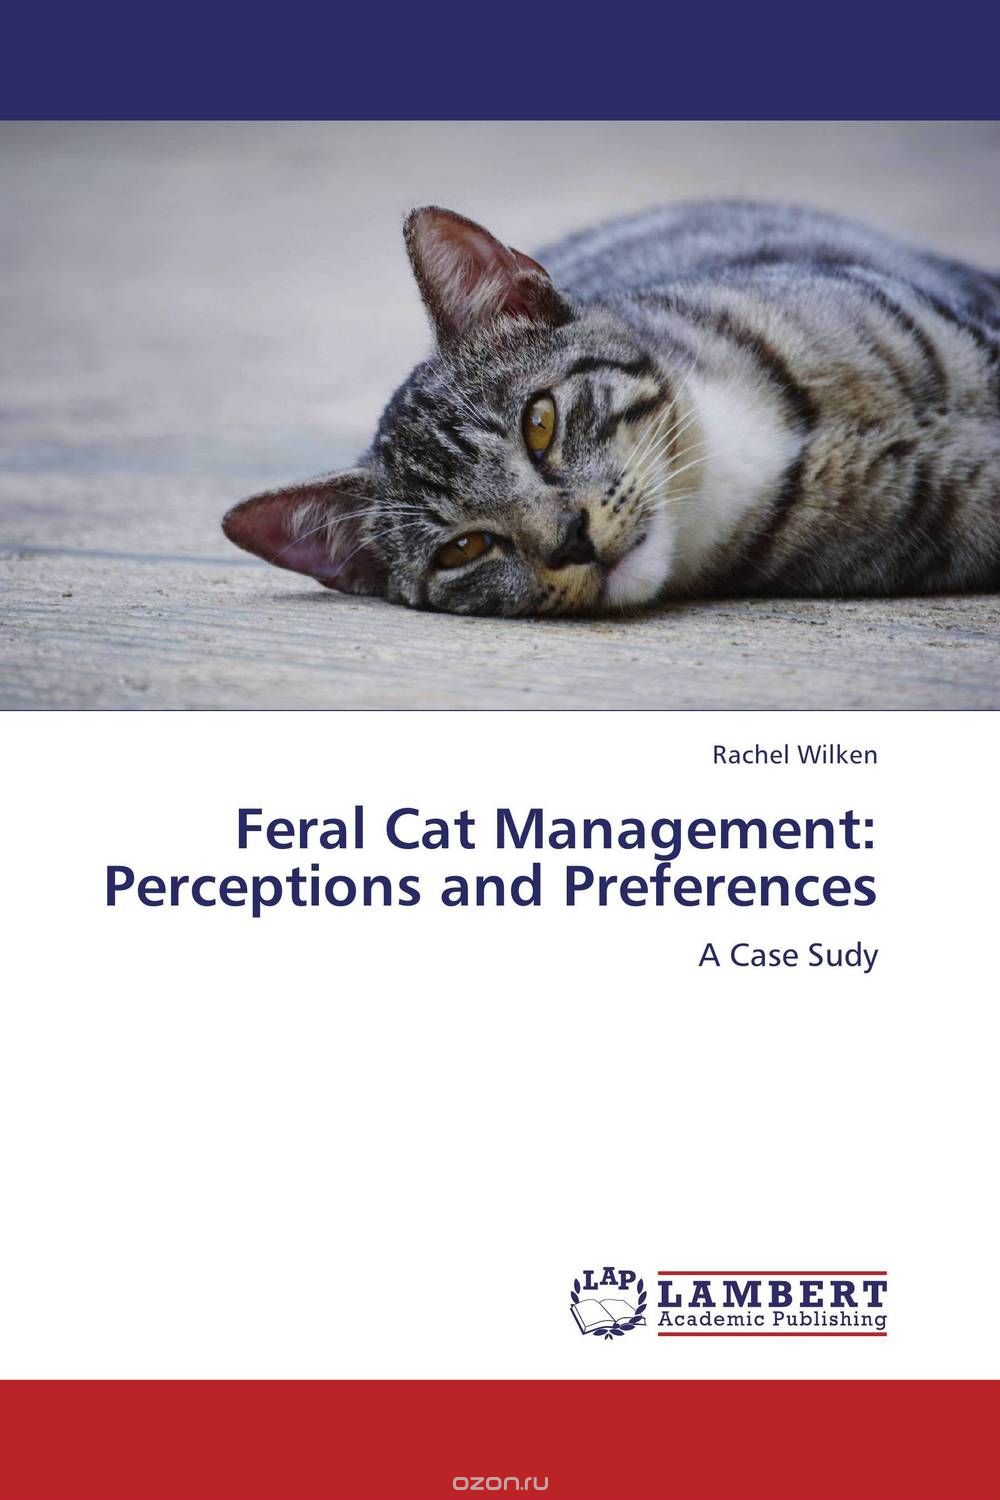 Скачать книгу "Feral Cat Management: Perceptions and Preferences"